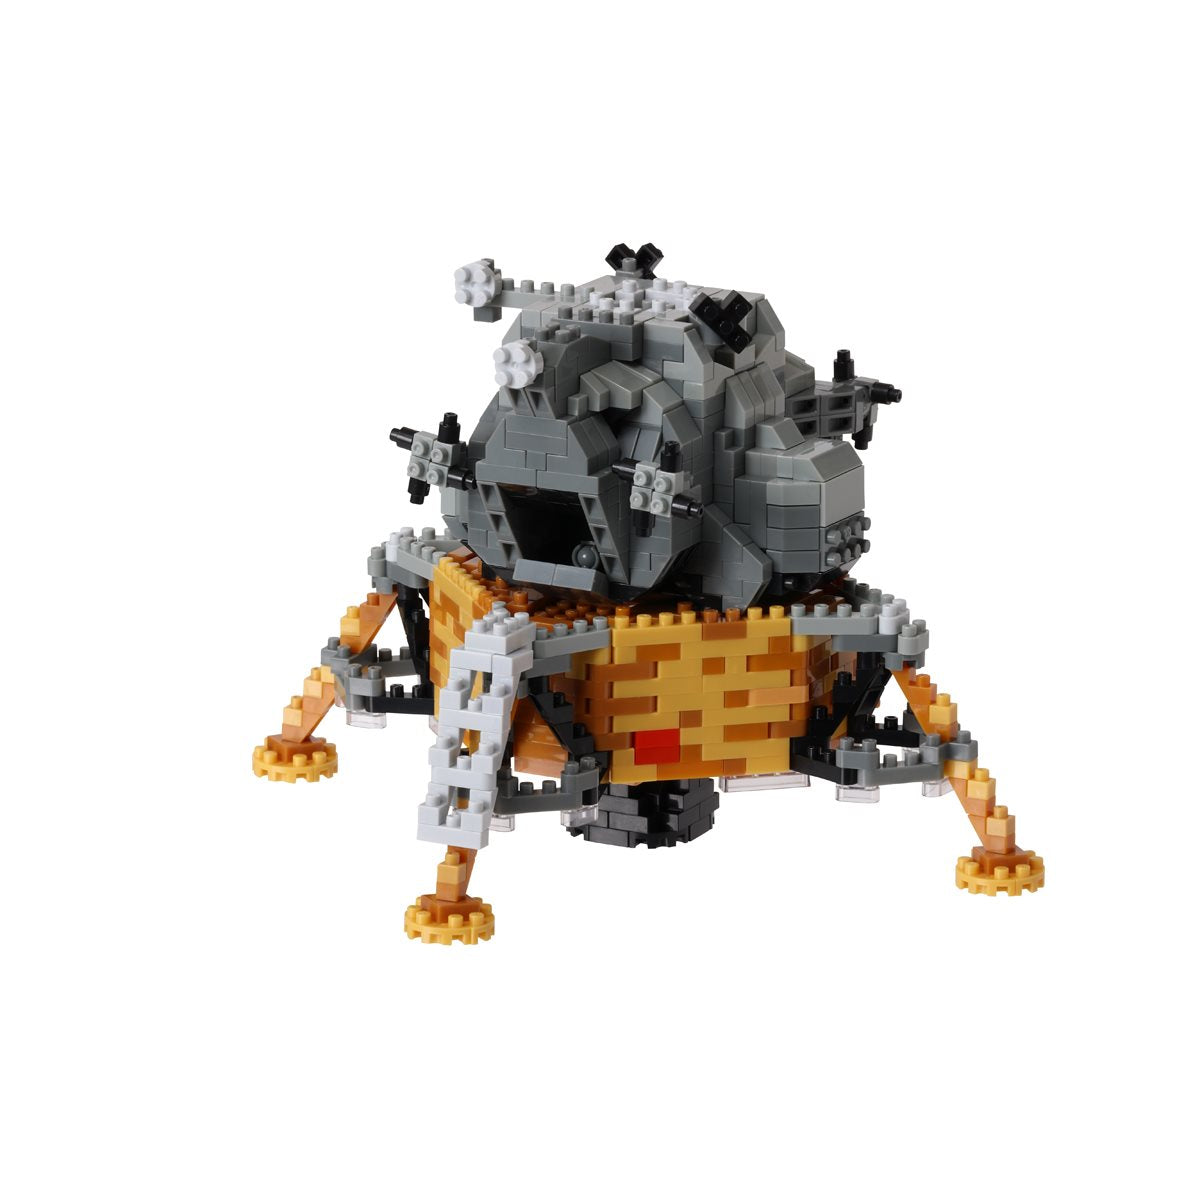 Nanoblock #039 Lunar Module